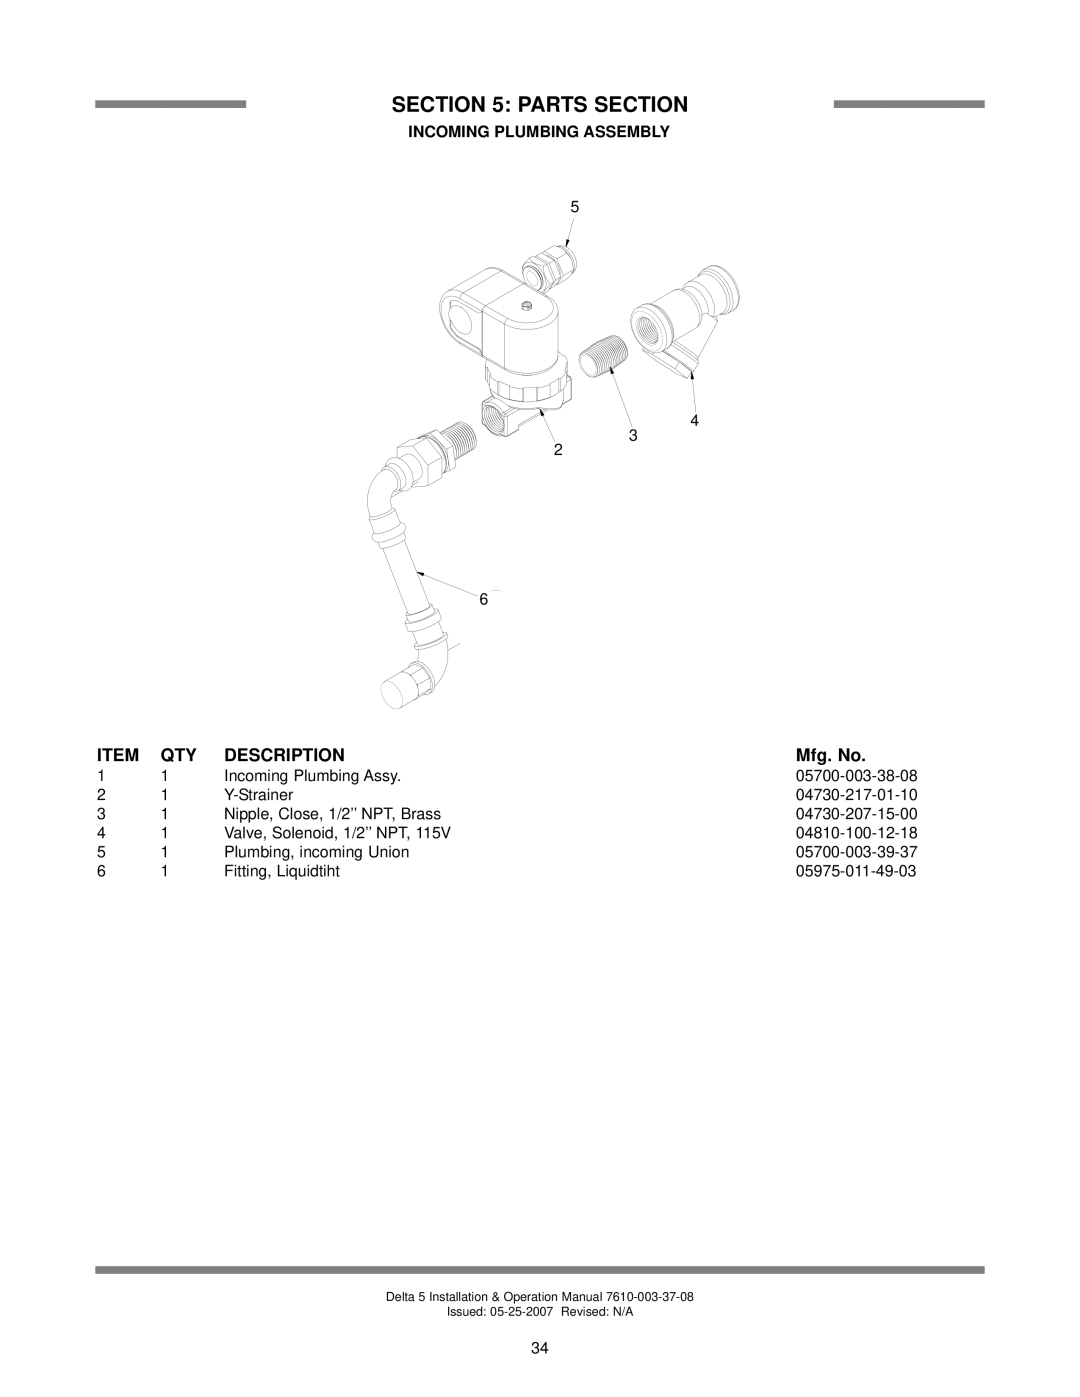 Jackson Delta 5, DELTA 5 D technical manual Incoming Plumbing Assembly, Parts Section, Description, Mfg. No 